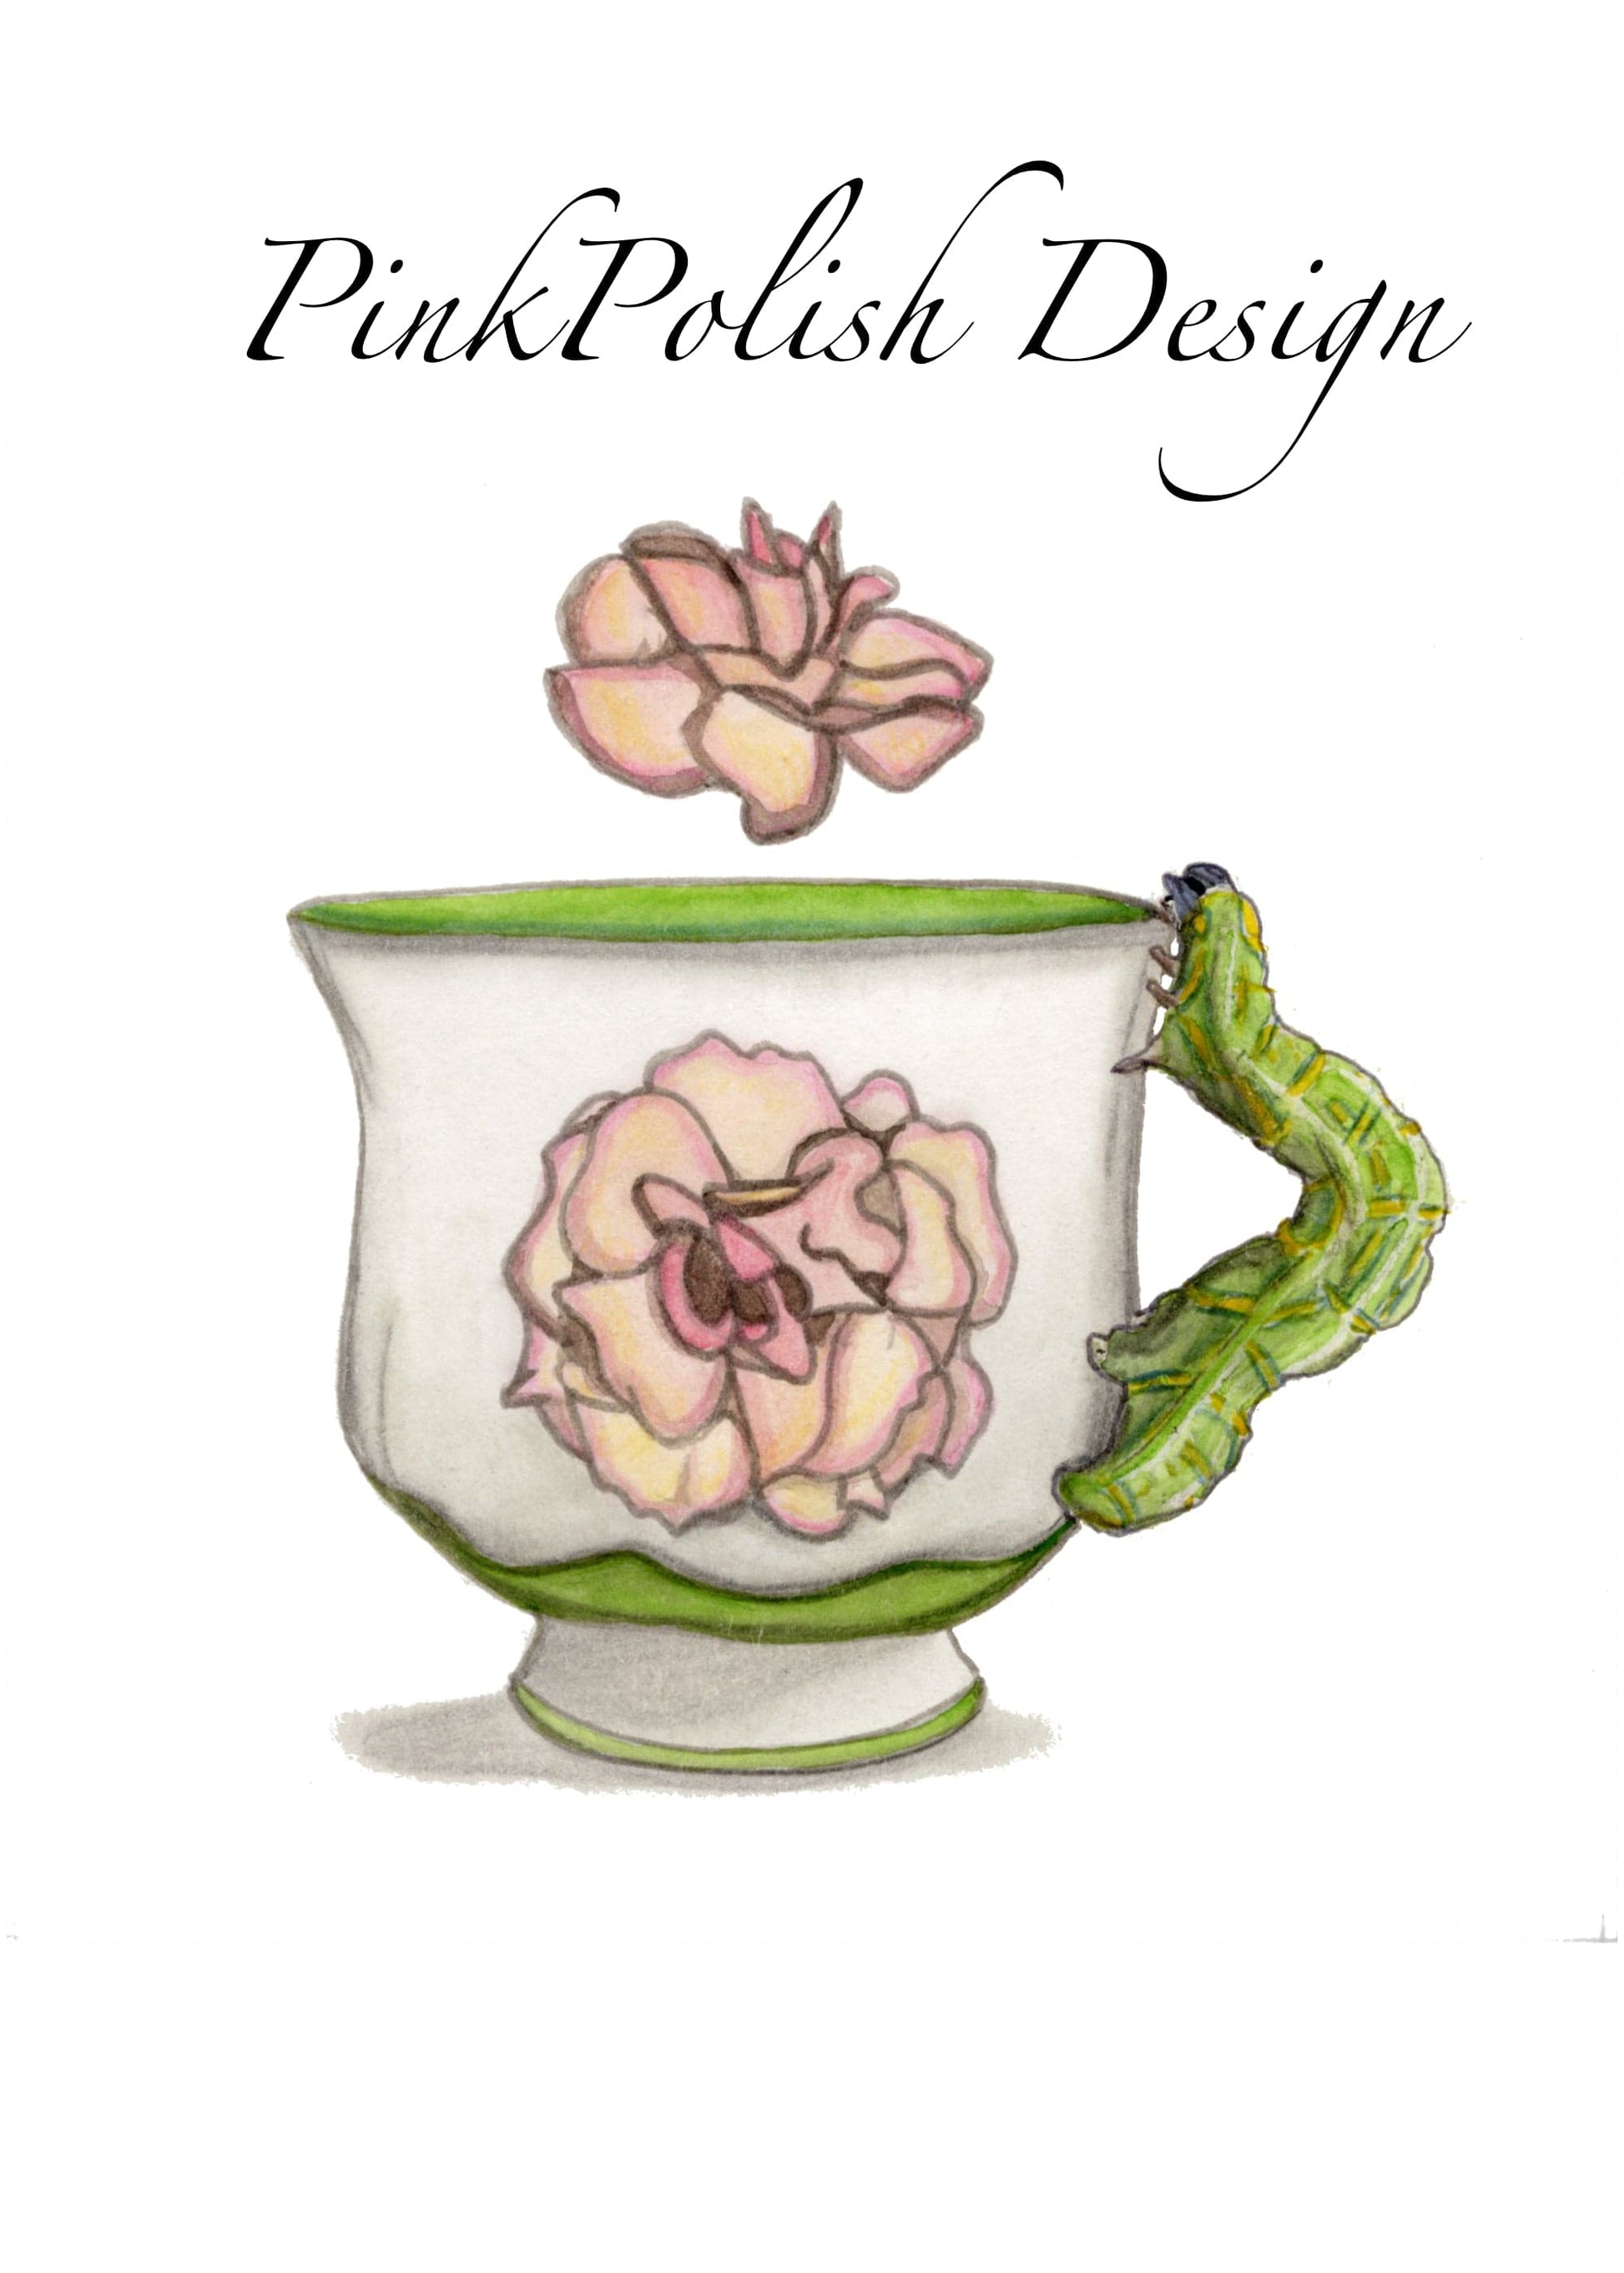 PinkPolish Design Art Prints "Wiggle of Tea" Watercolor Painting: Art Print